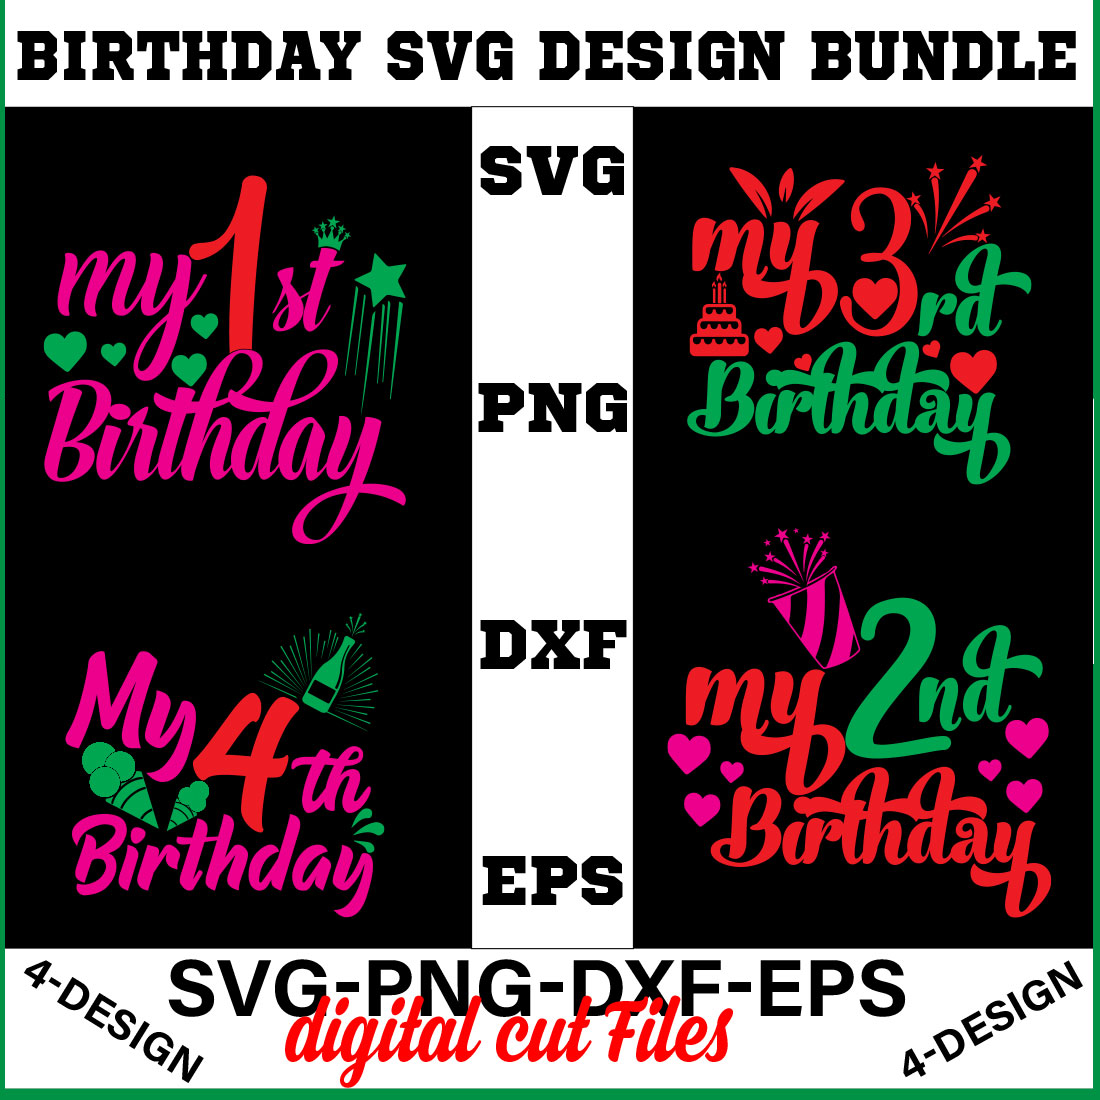 birthday svg design bundle Happy birthday svg bundle hand lettered birthday svg birthday party svg Volume-01 cover image.